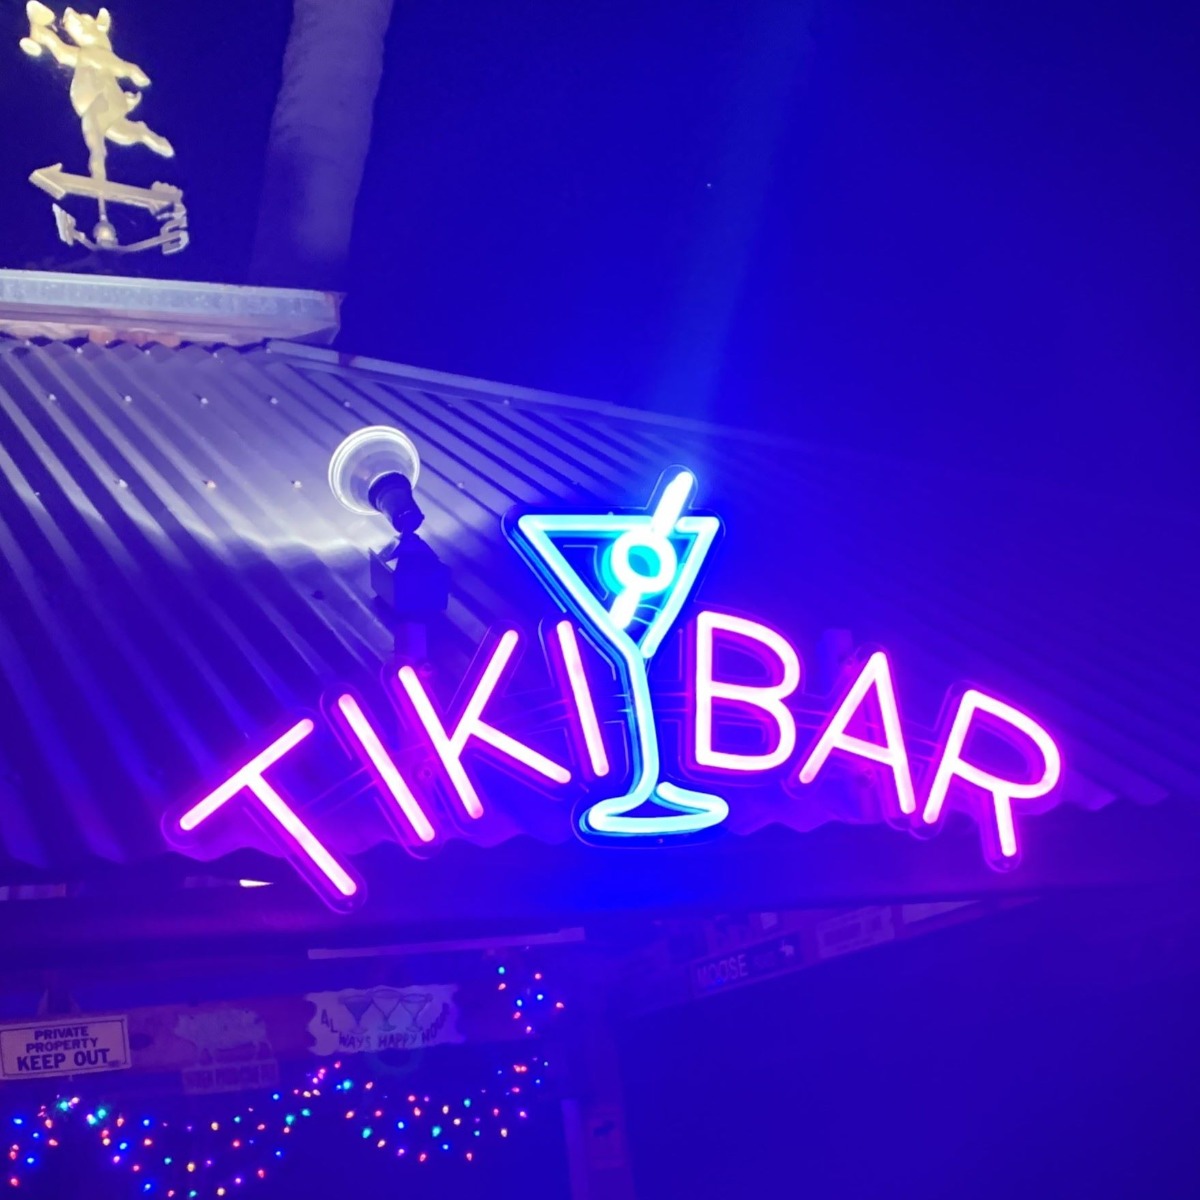 Custom Neon® outdoor Tiki Bar sign @barbaradrndak